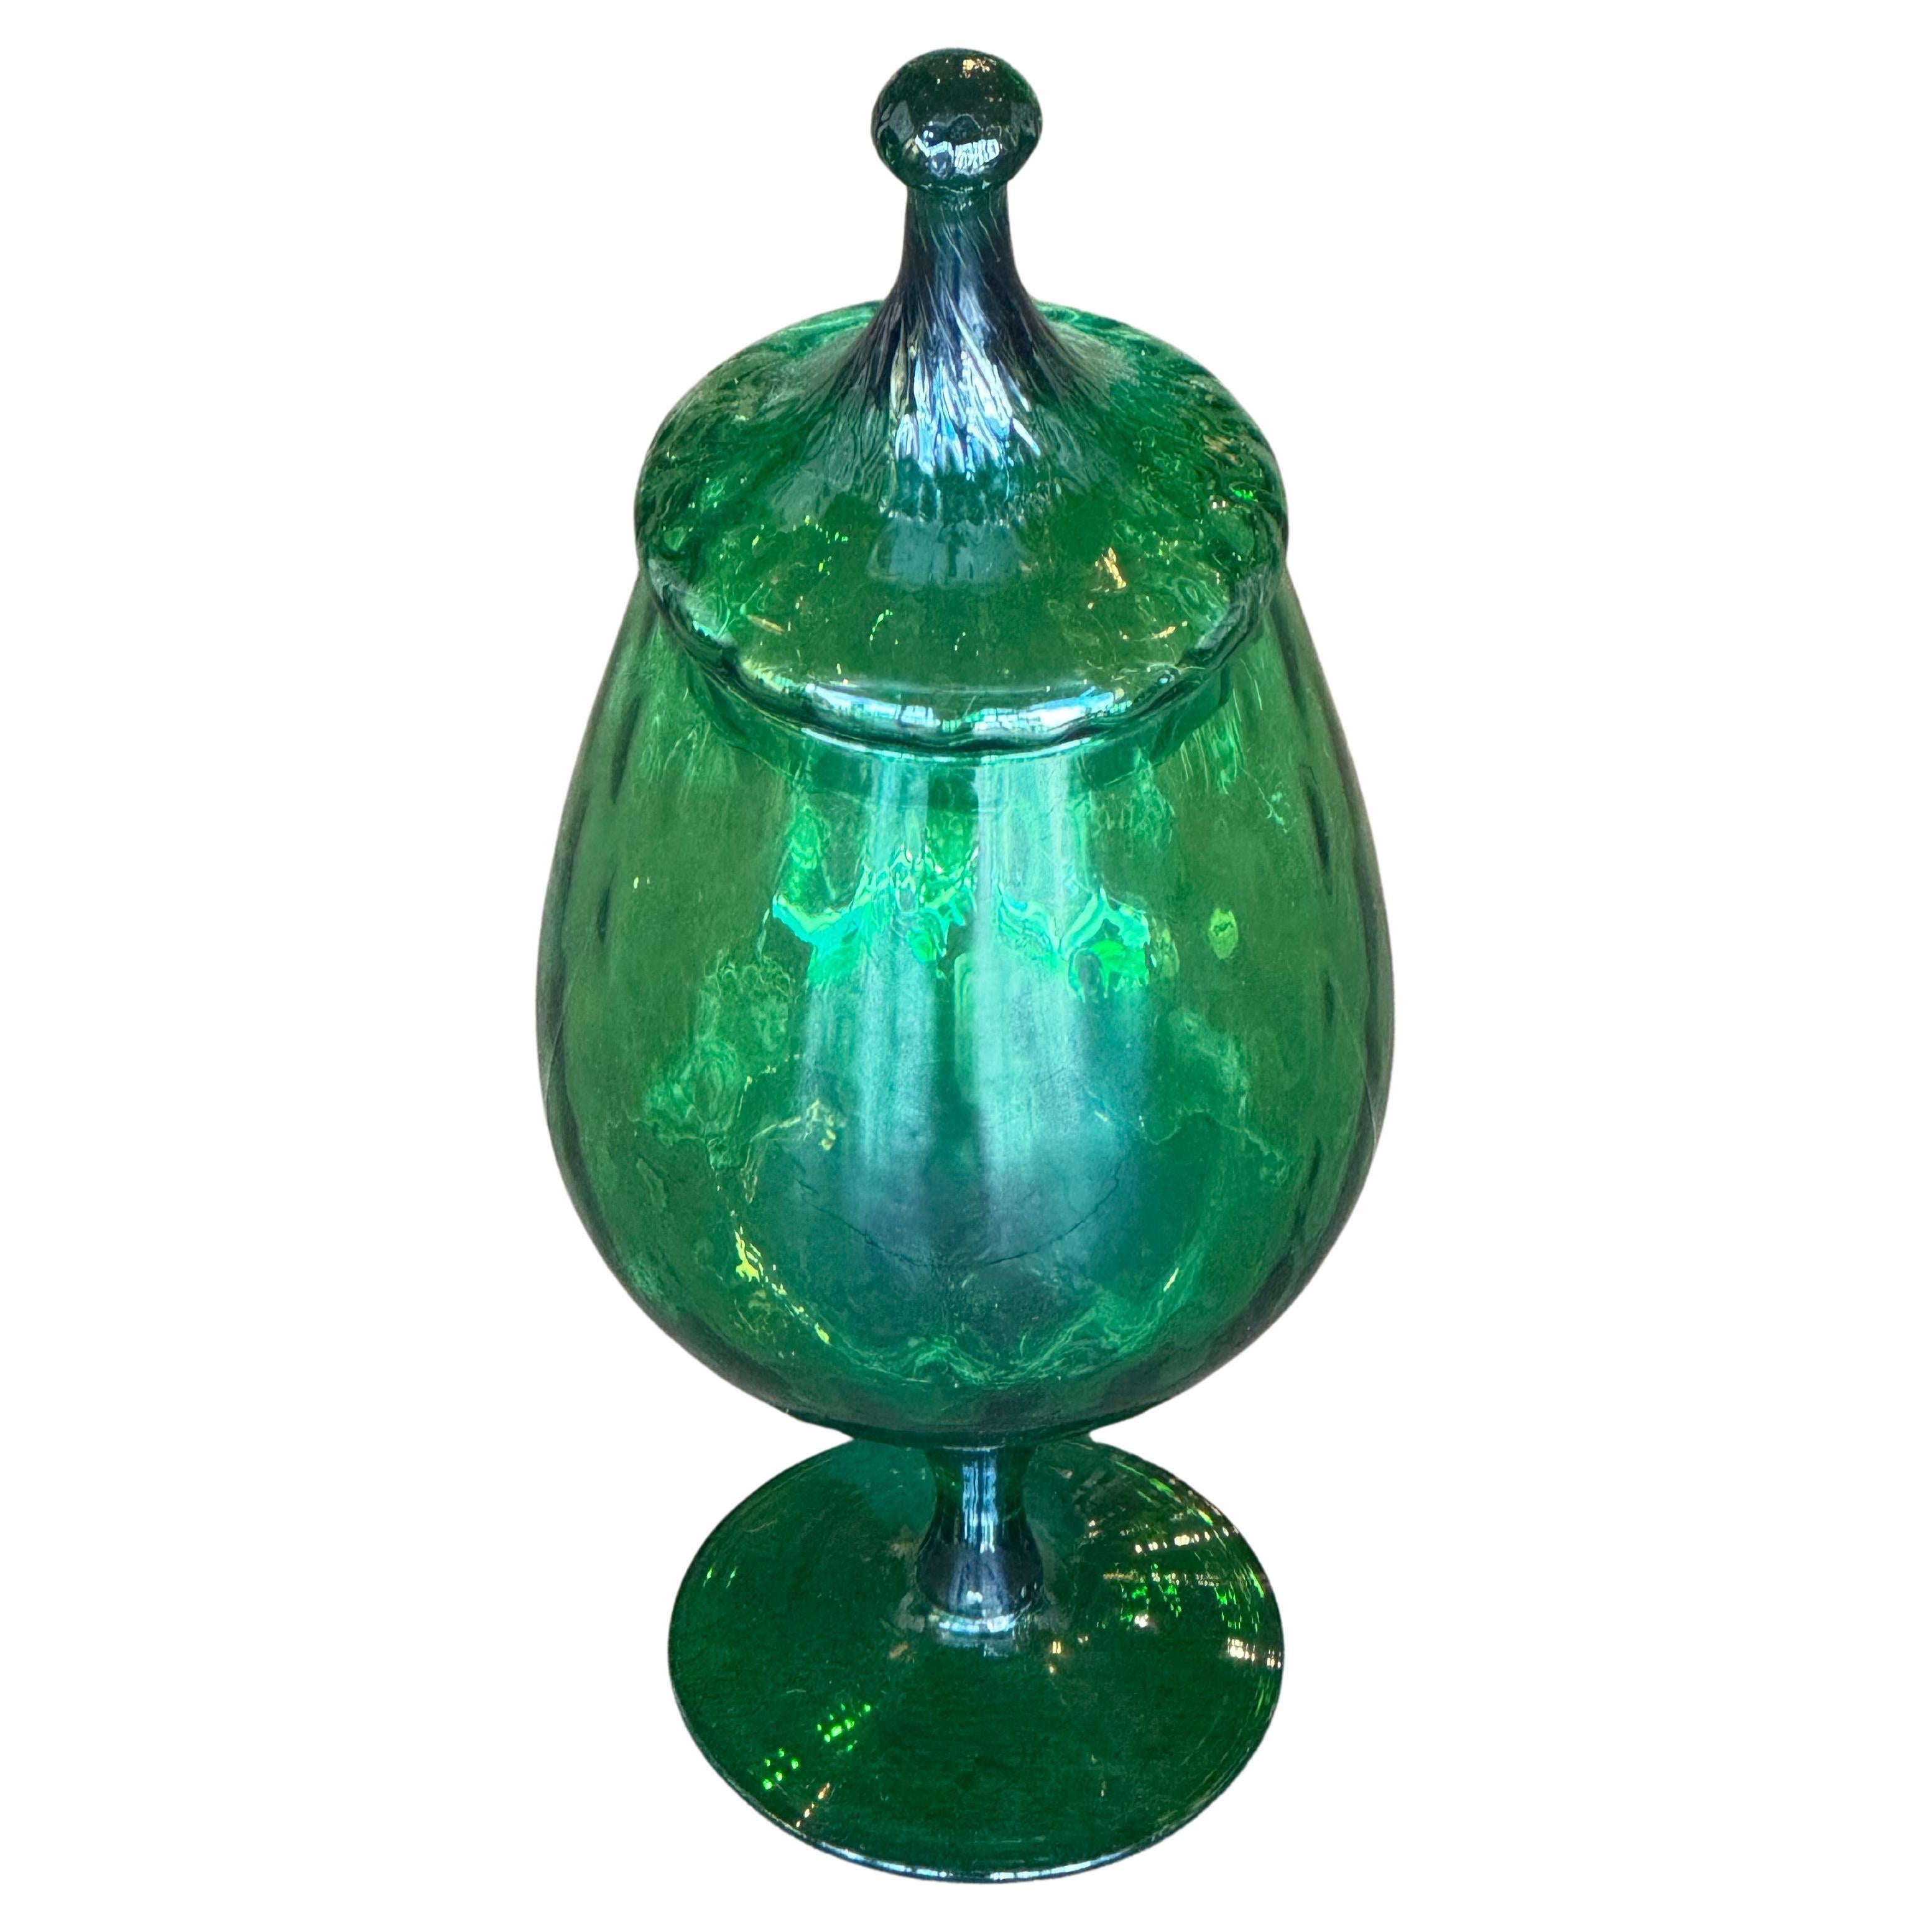 Moroccan Hand-Blown Emerald Green Glass Decanter